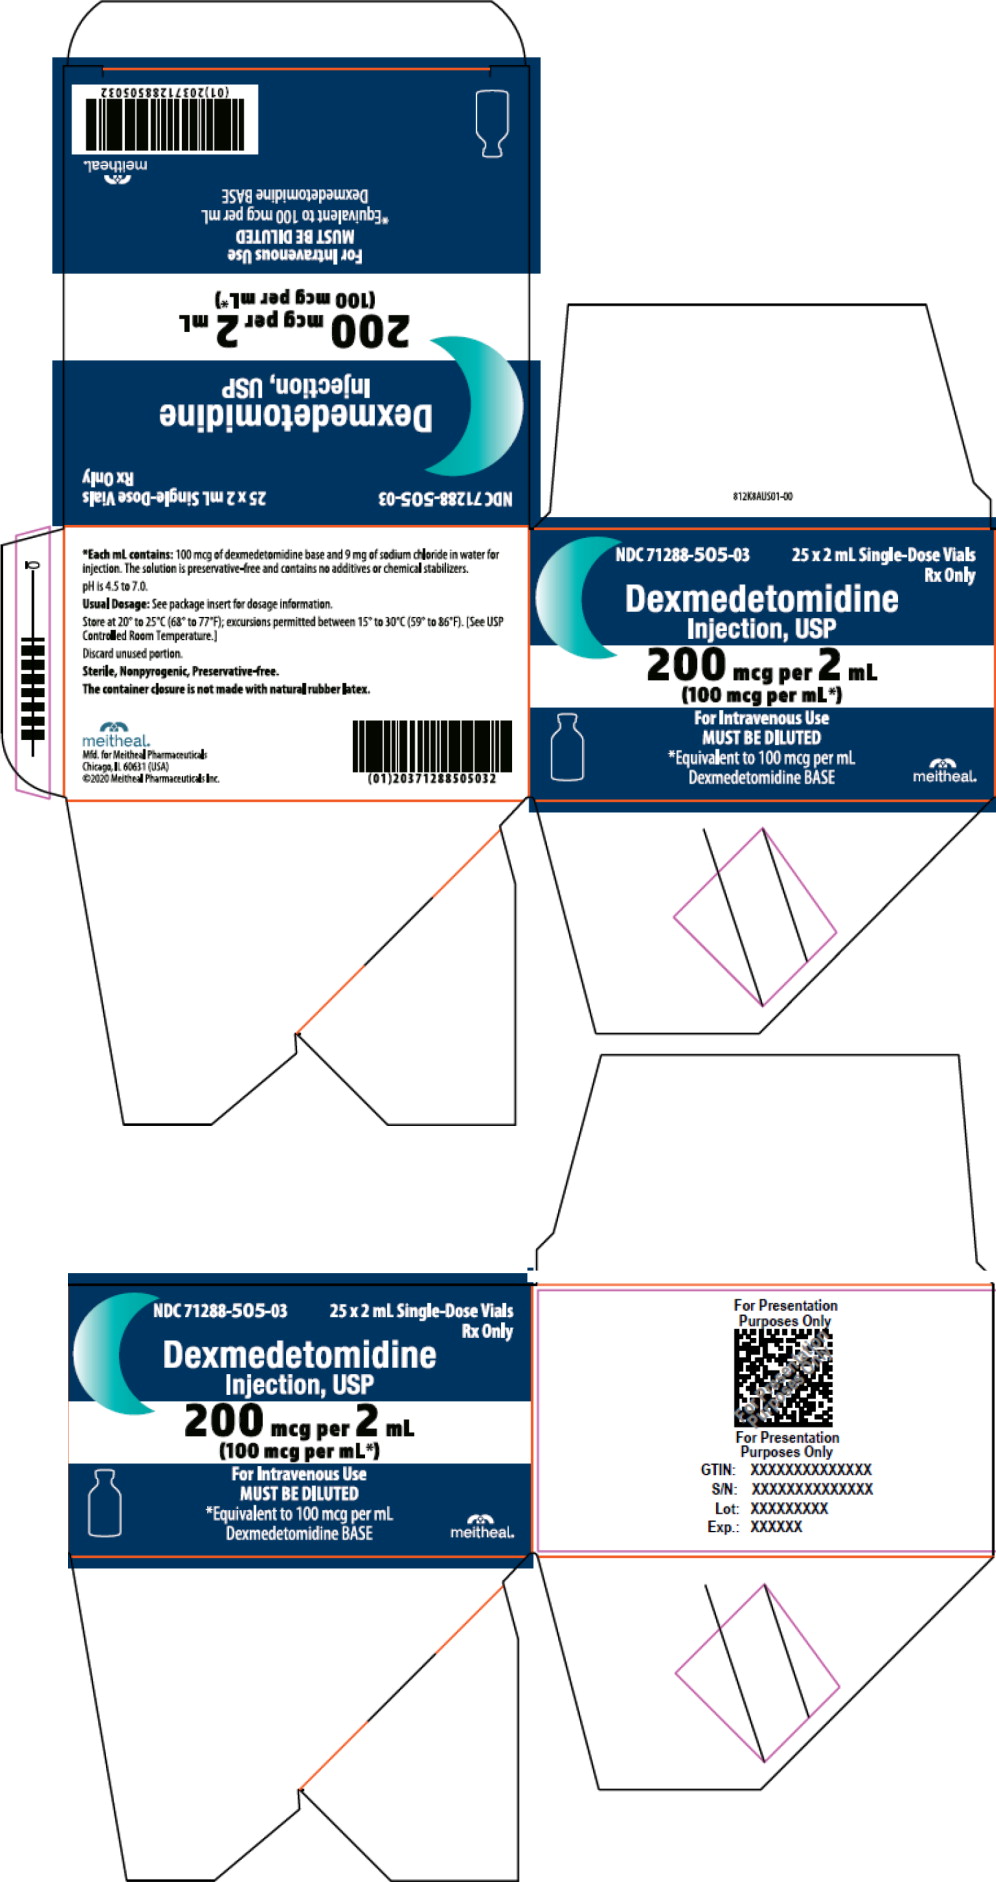 PRINCIPAL DISPLAY PANEL – Dexmedetomidine Injection, USP 200 mcg per 2 mL Carton